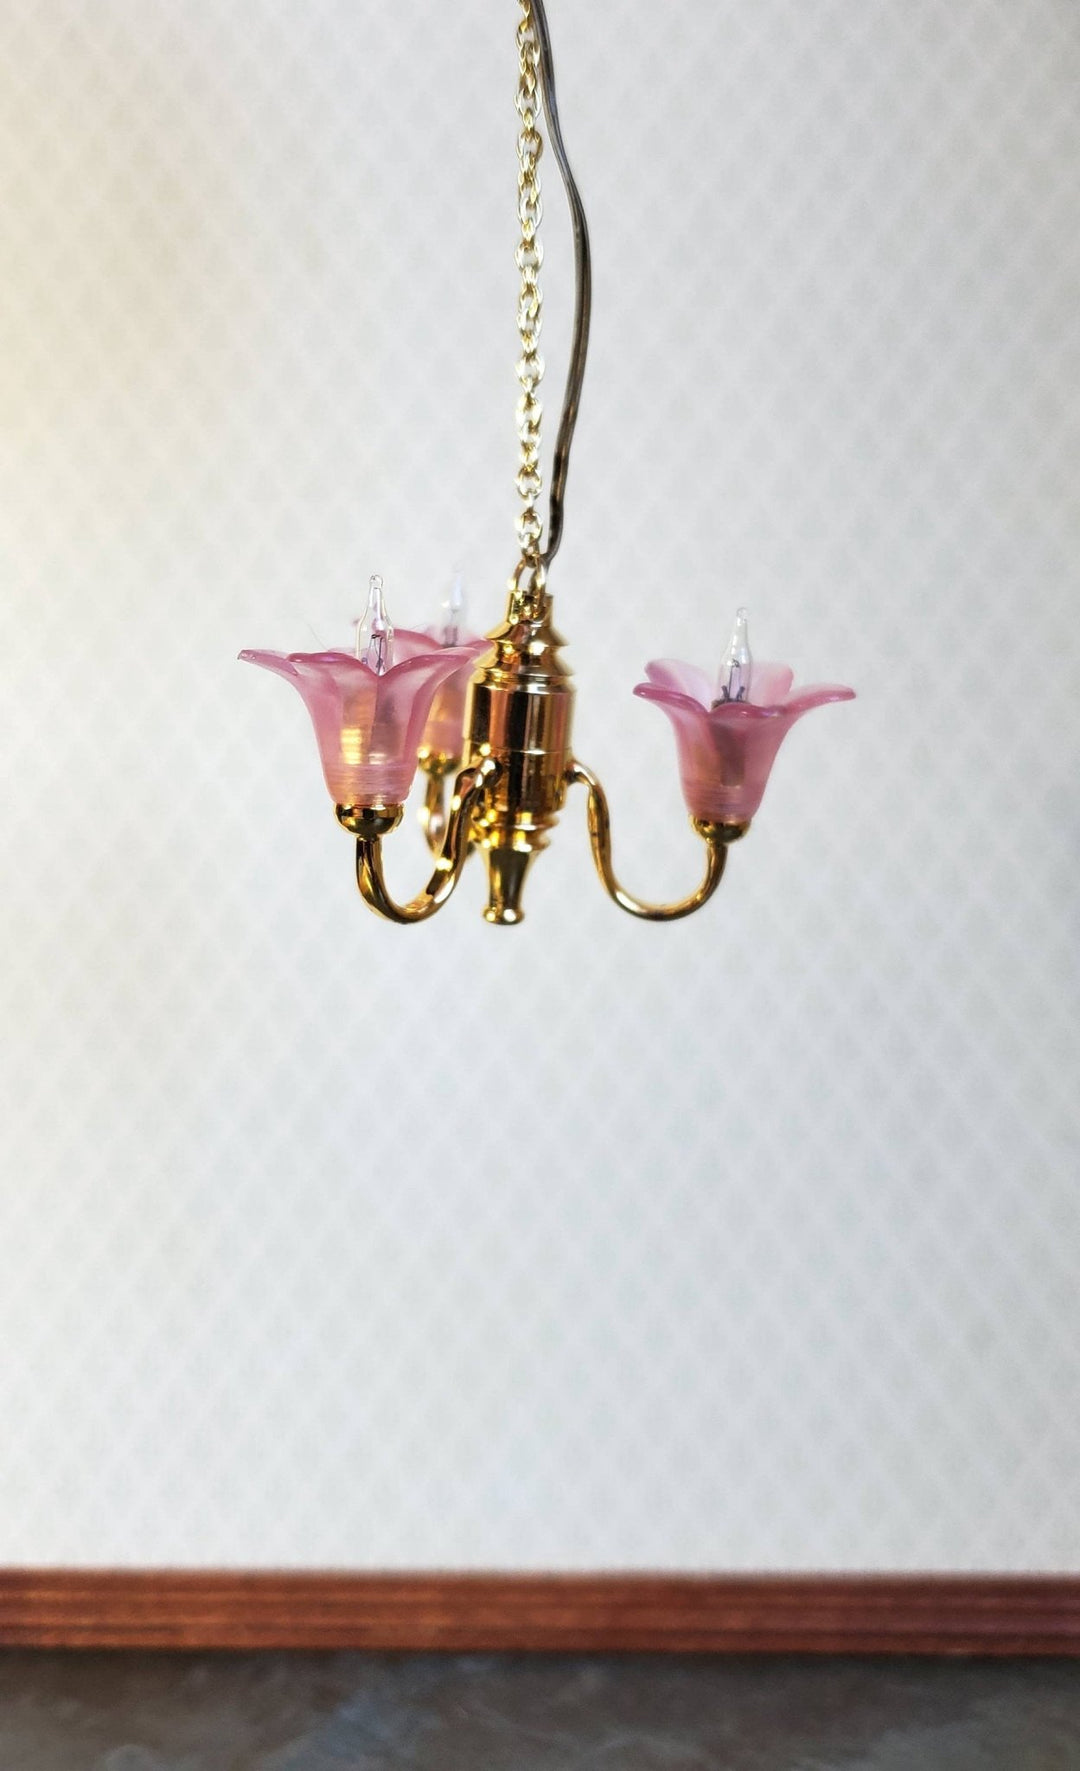 Dollhouse Miniature Chandelier Pink Flowers Light Hanging 3 Arm Electric 1:12 Scale 12 Volt - Miniature Crush